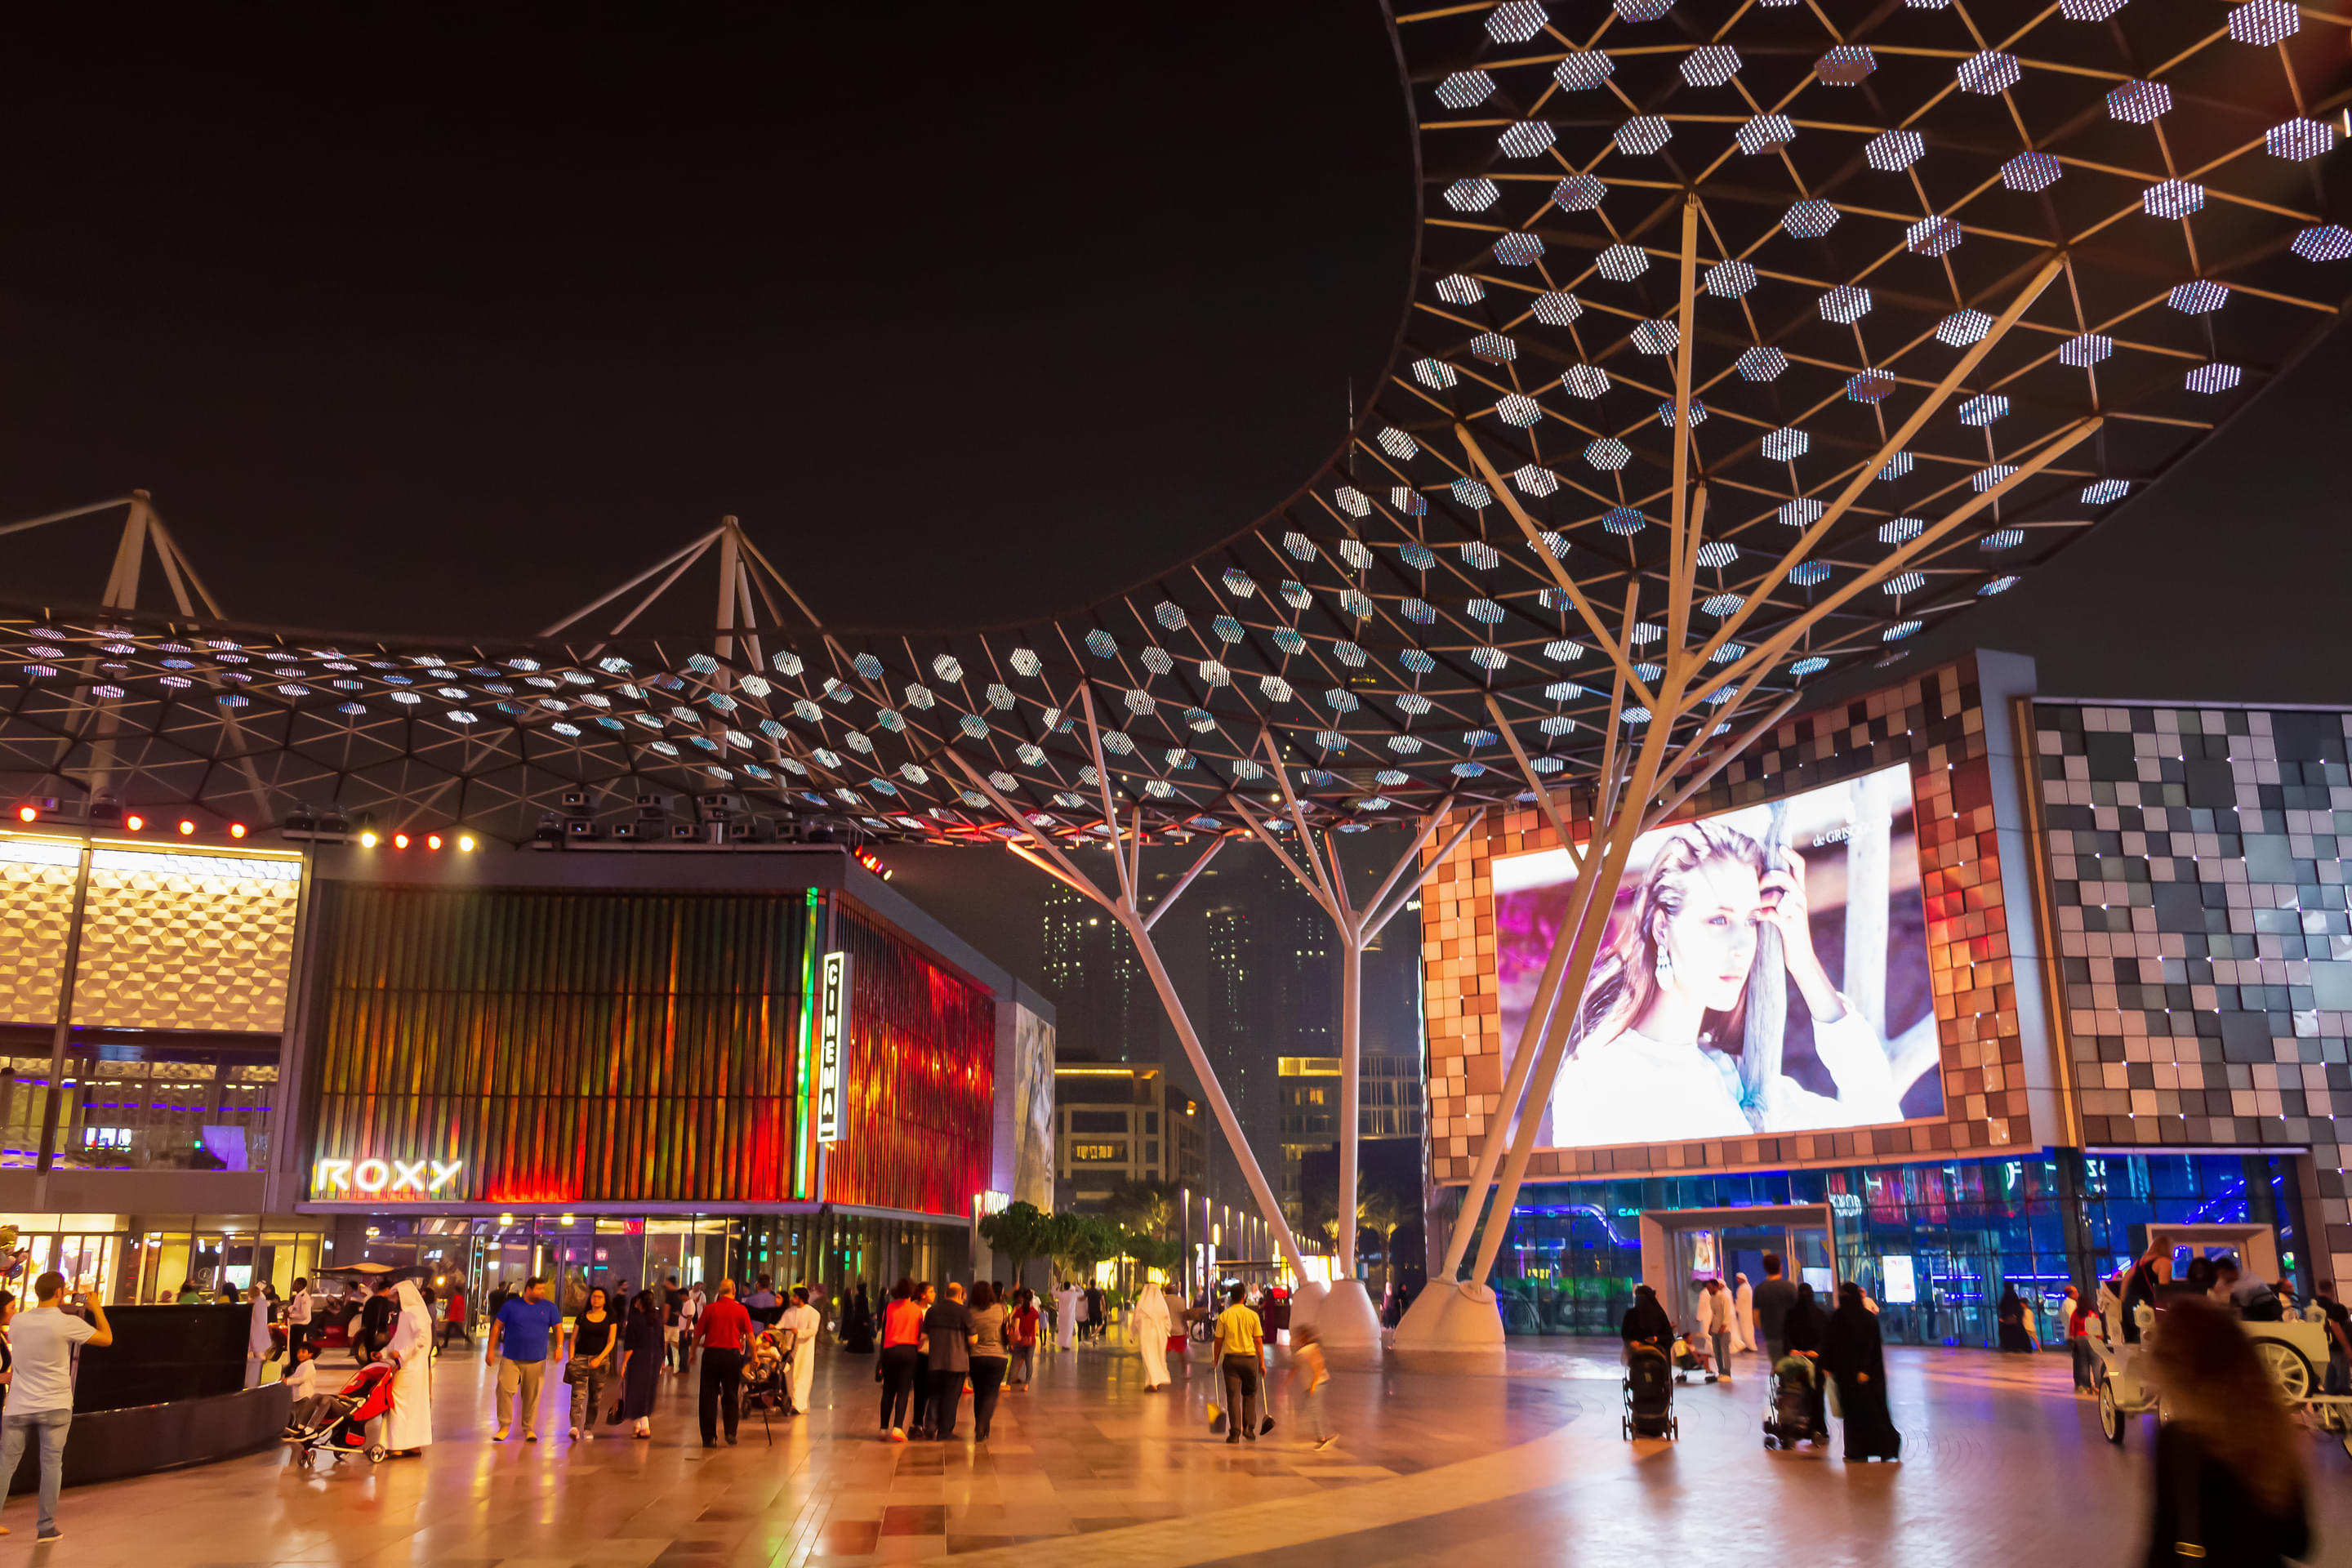 Dubai Festival City Mall Overview